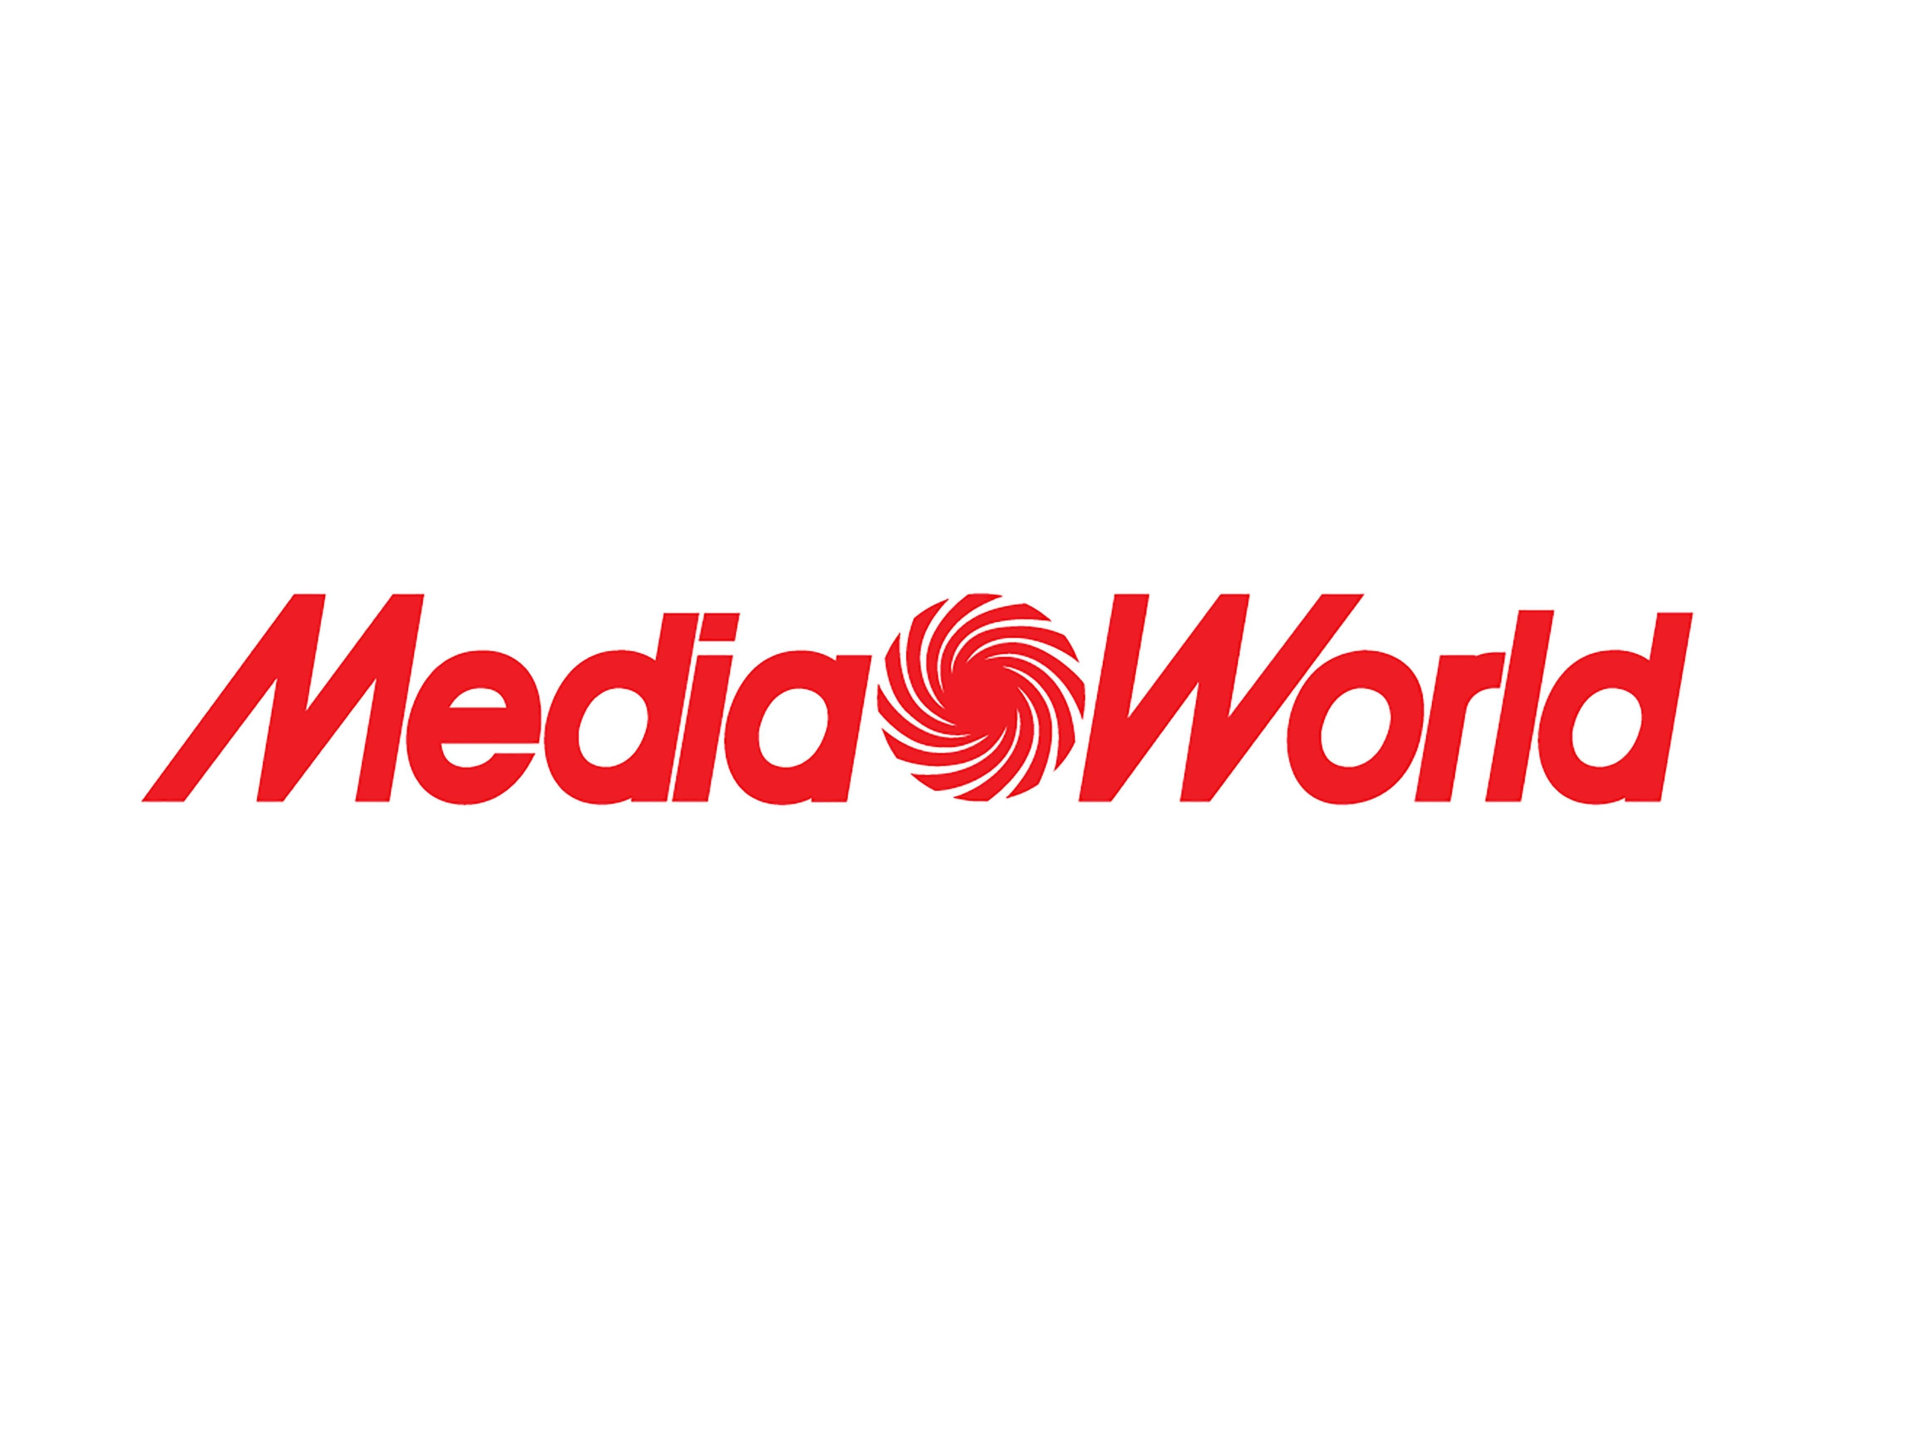 codice promo mediaworldmediaworld codice promozionale	codice sconto mediaworld paypal